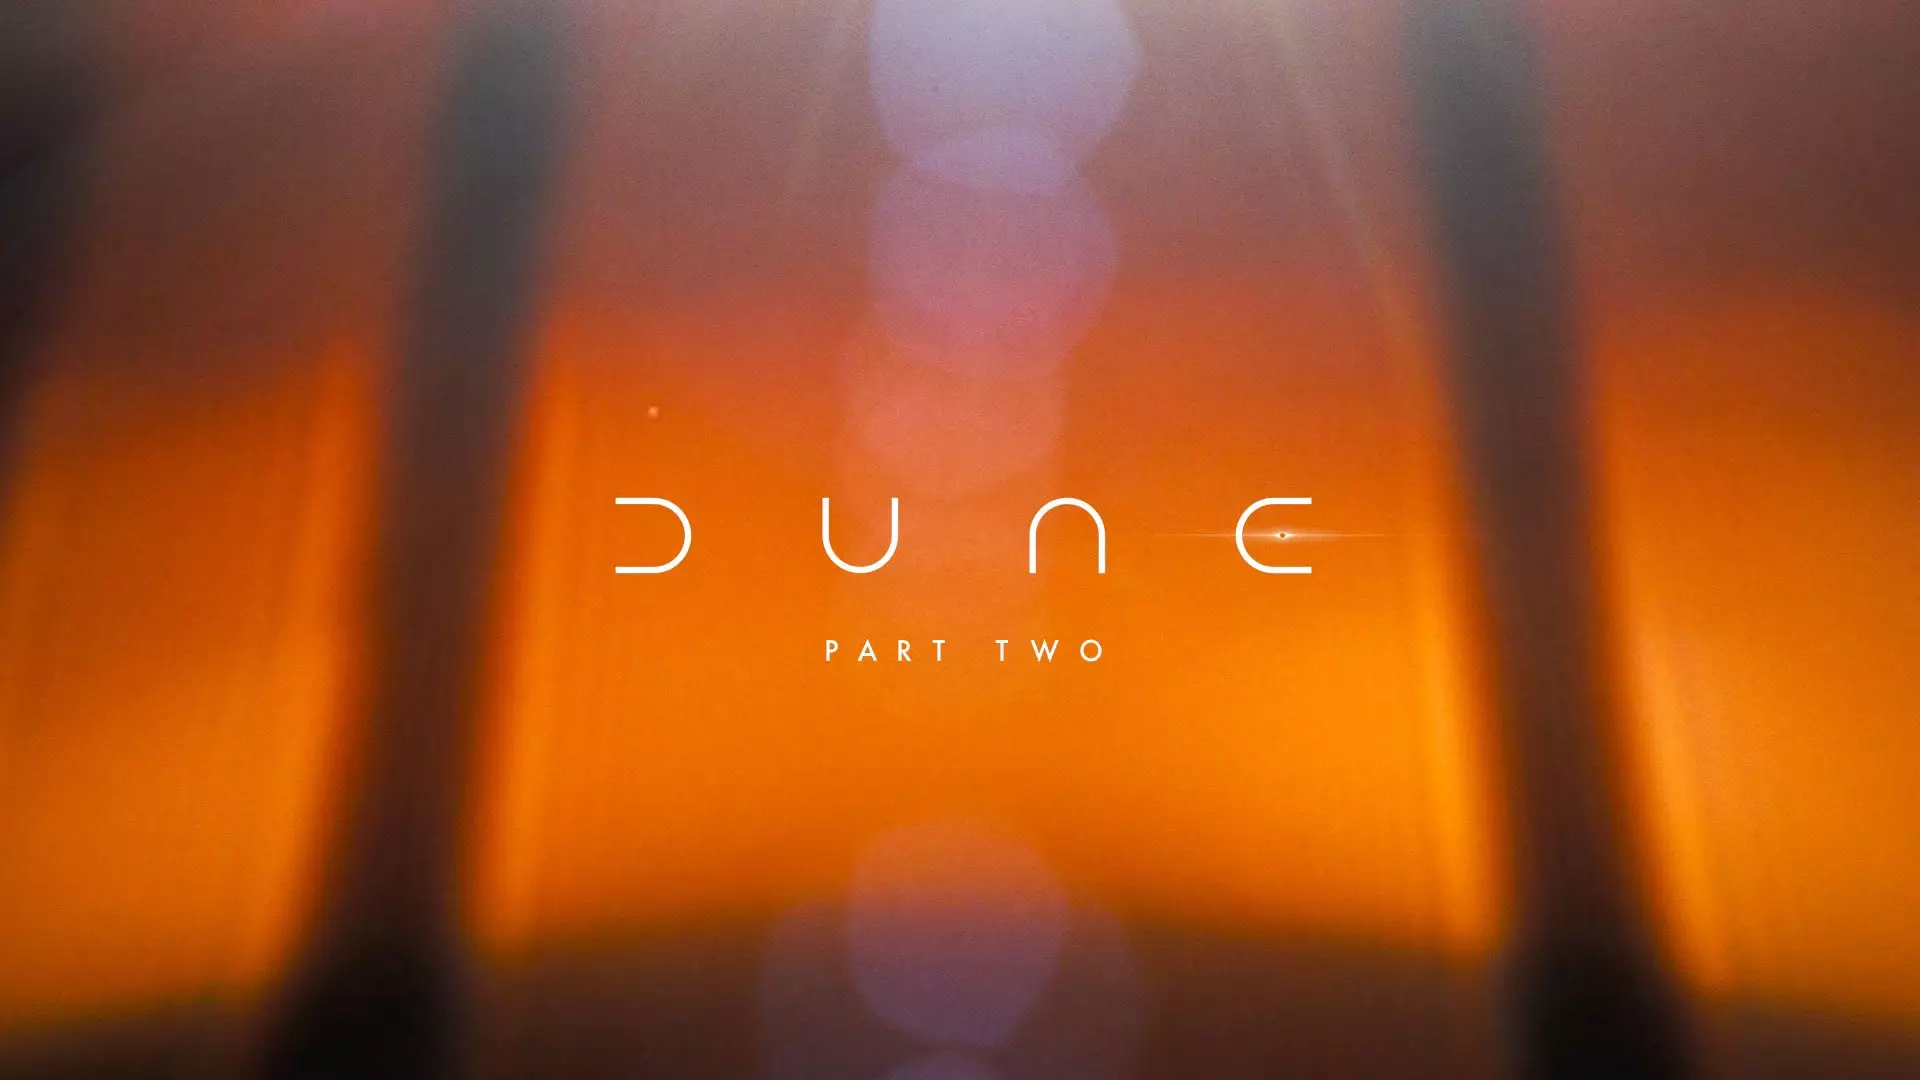 The Sequel To Denis Villeneuve's Dune Has Officially Been Confirmed